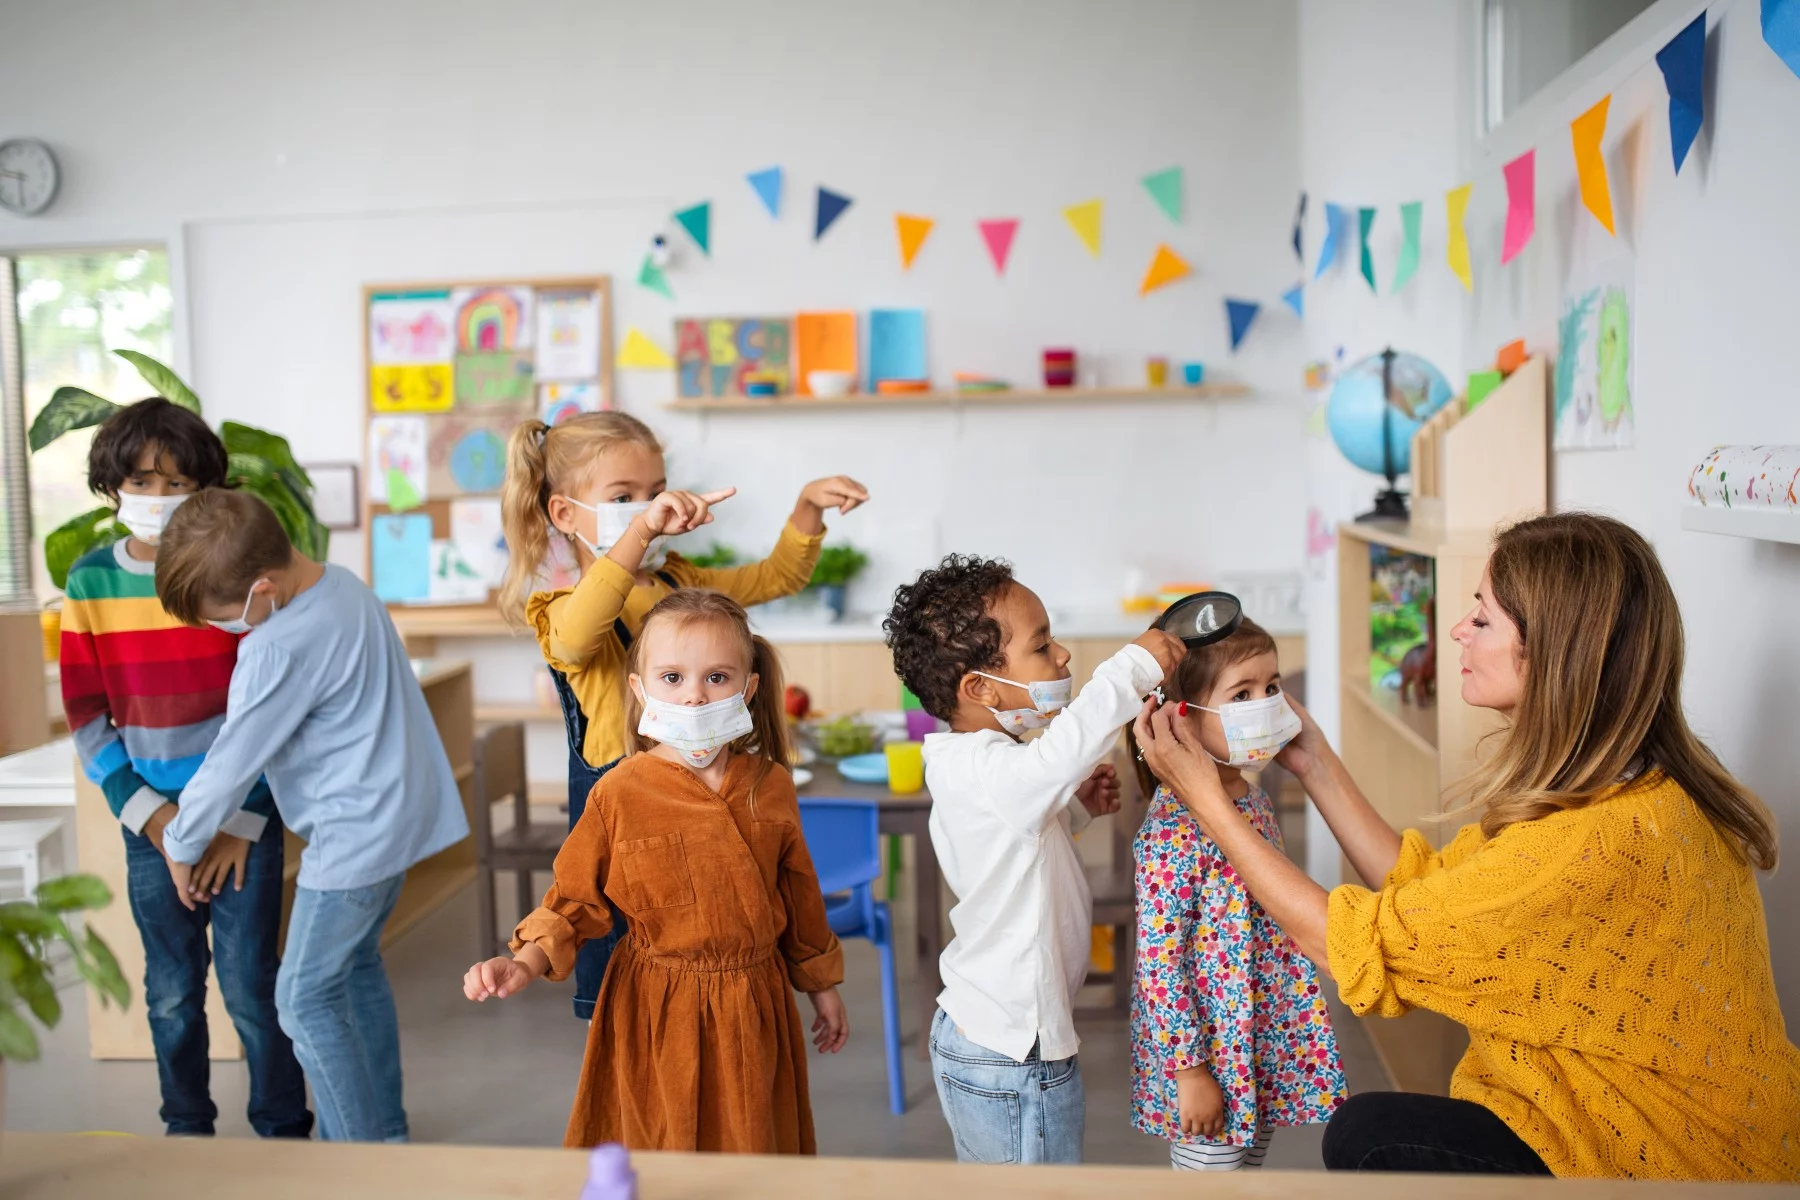 Preschool teacher helping little girl put on a face mask indoors at nursery school.